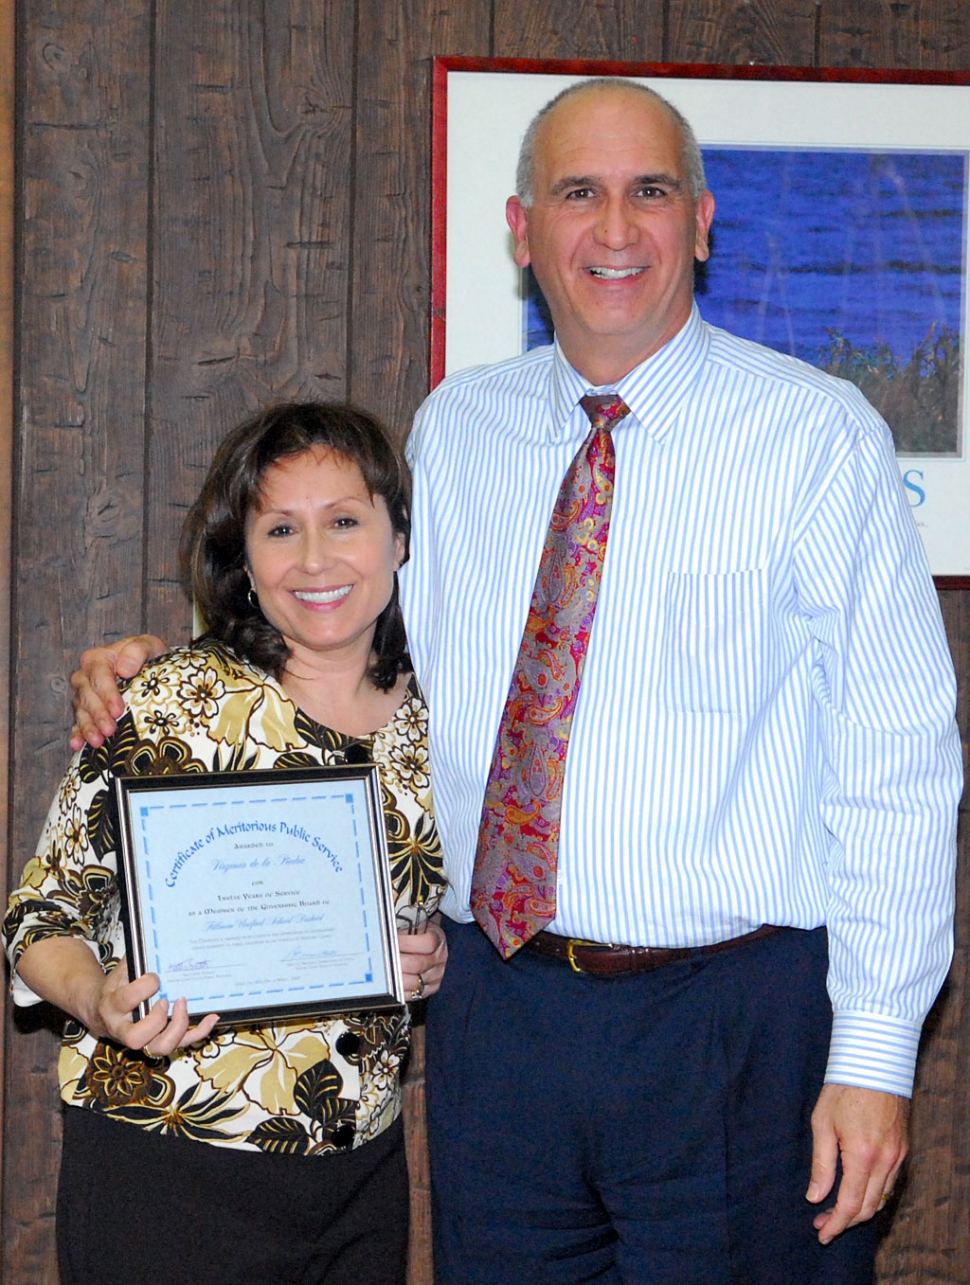 At last night’s school board meeting Superintendent Sweeney presented Virginia De la Piedra (left) a Certificate of Meritorious Public Service.